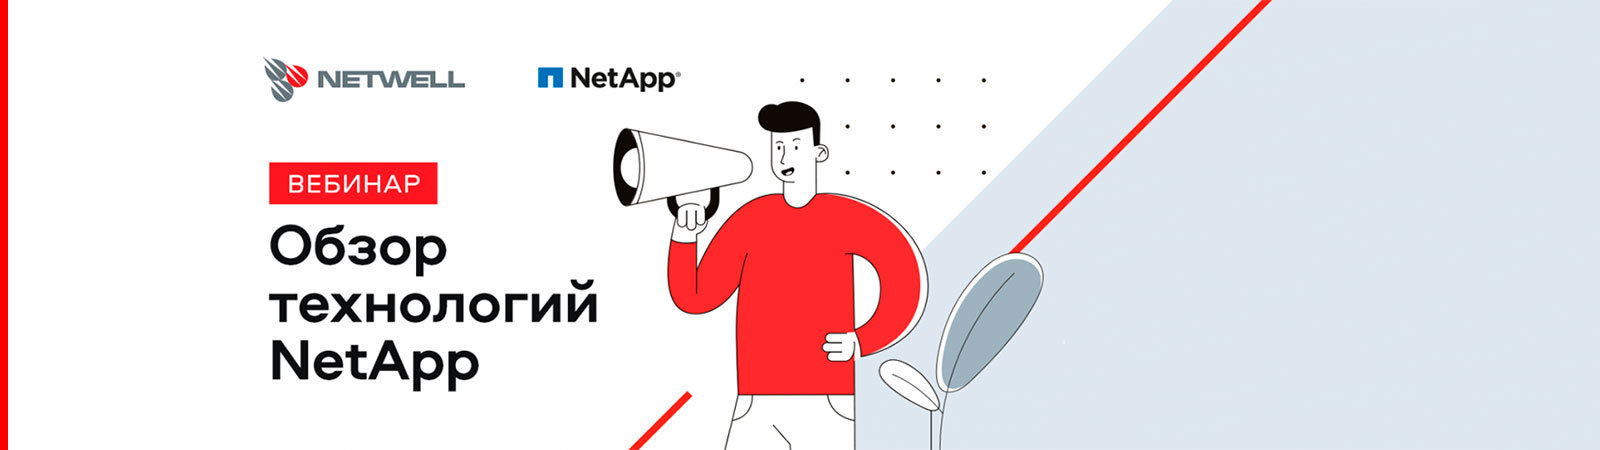 Вебинар-NetApp-Технологии